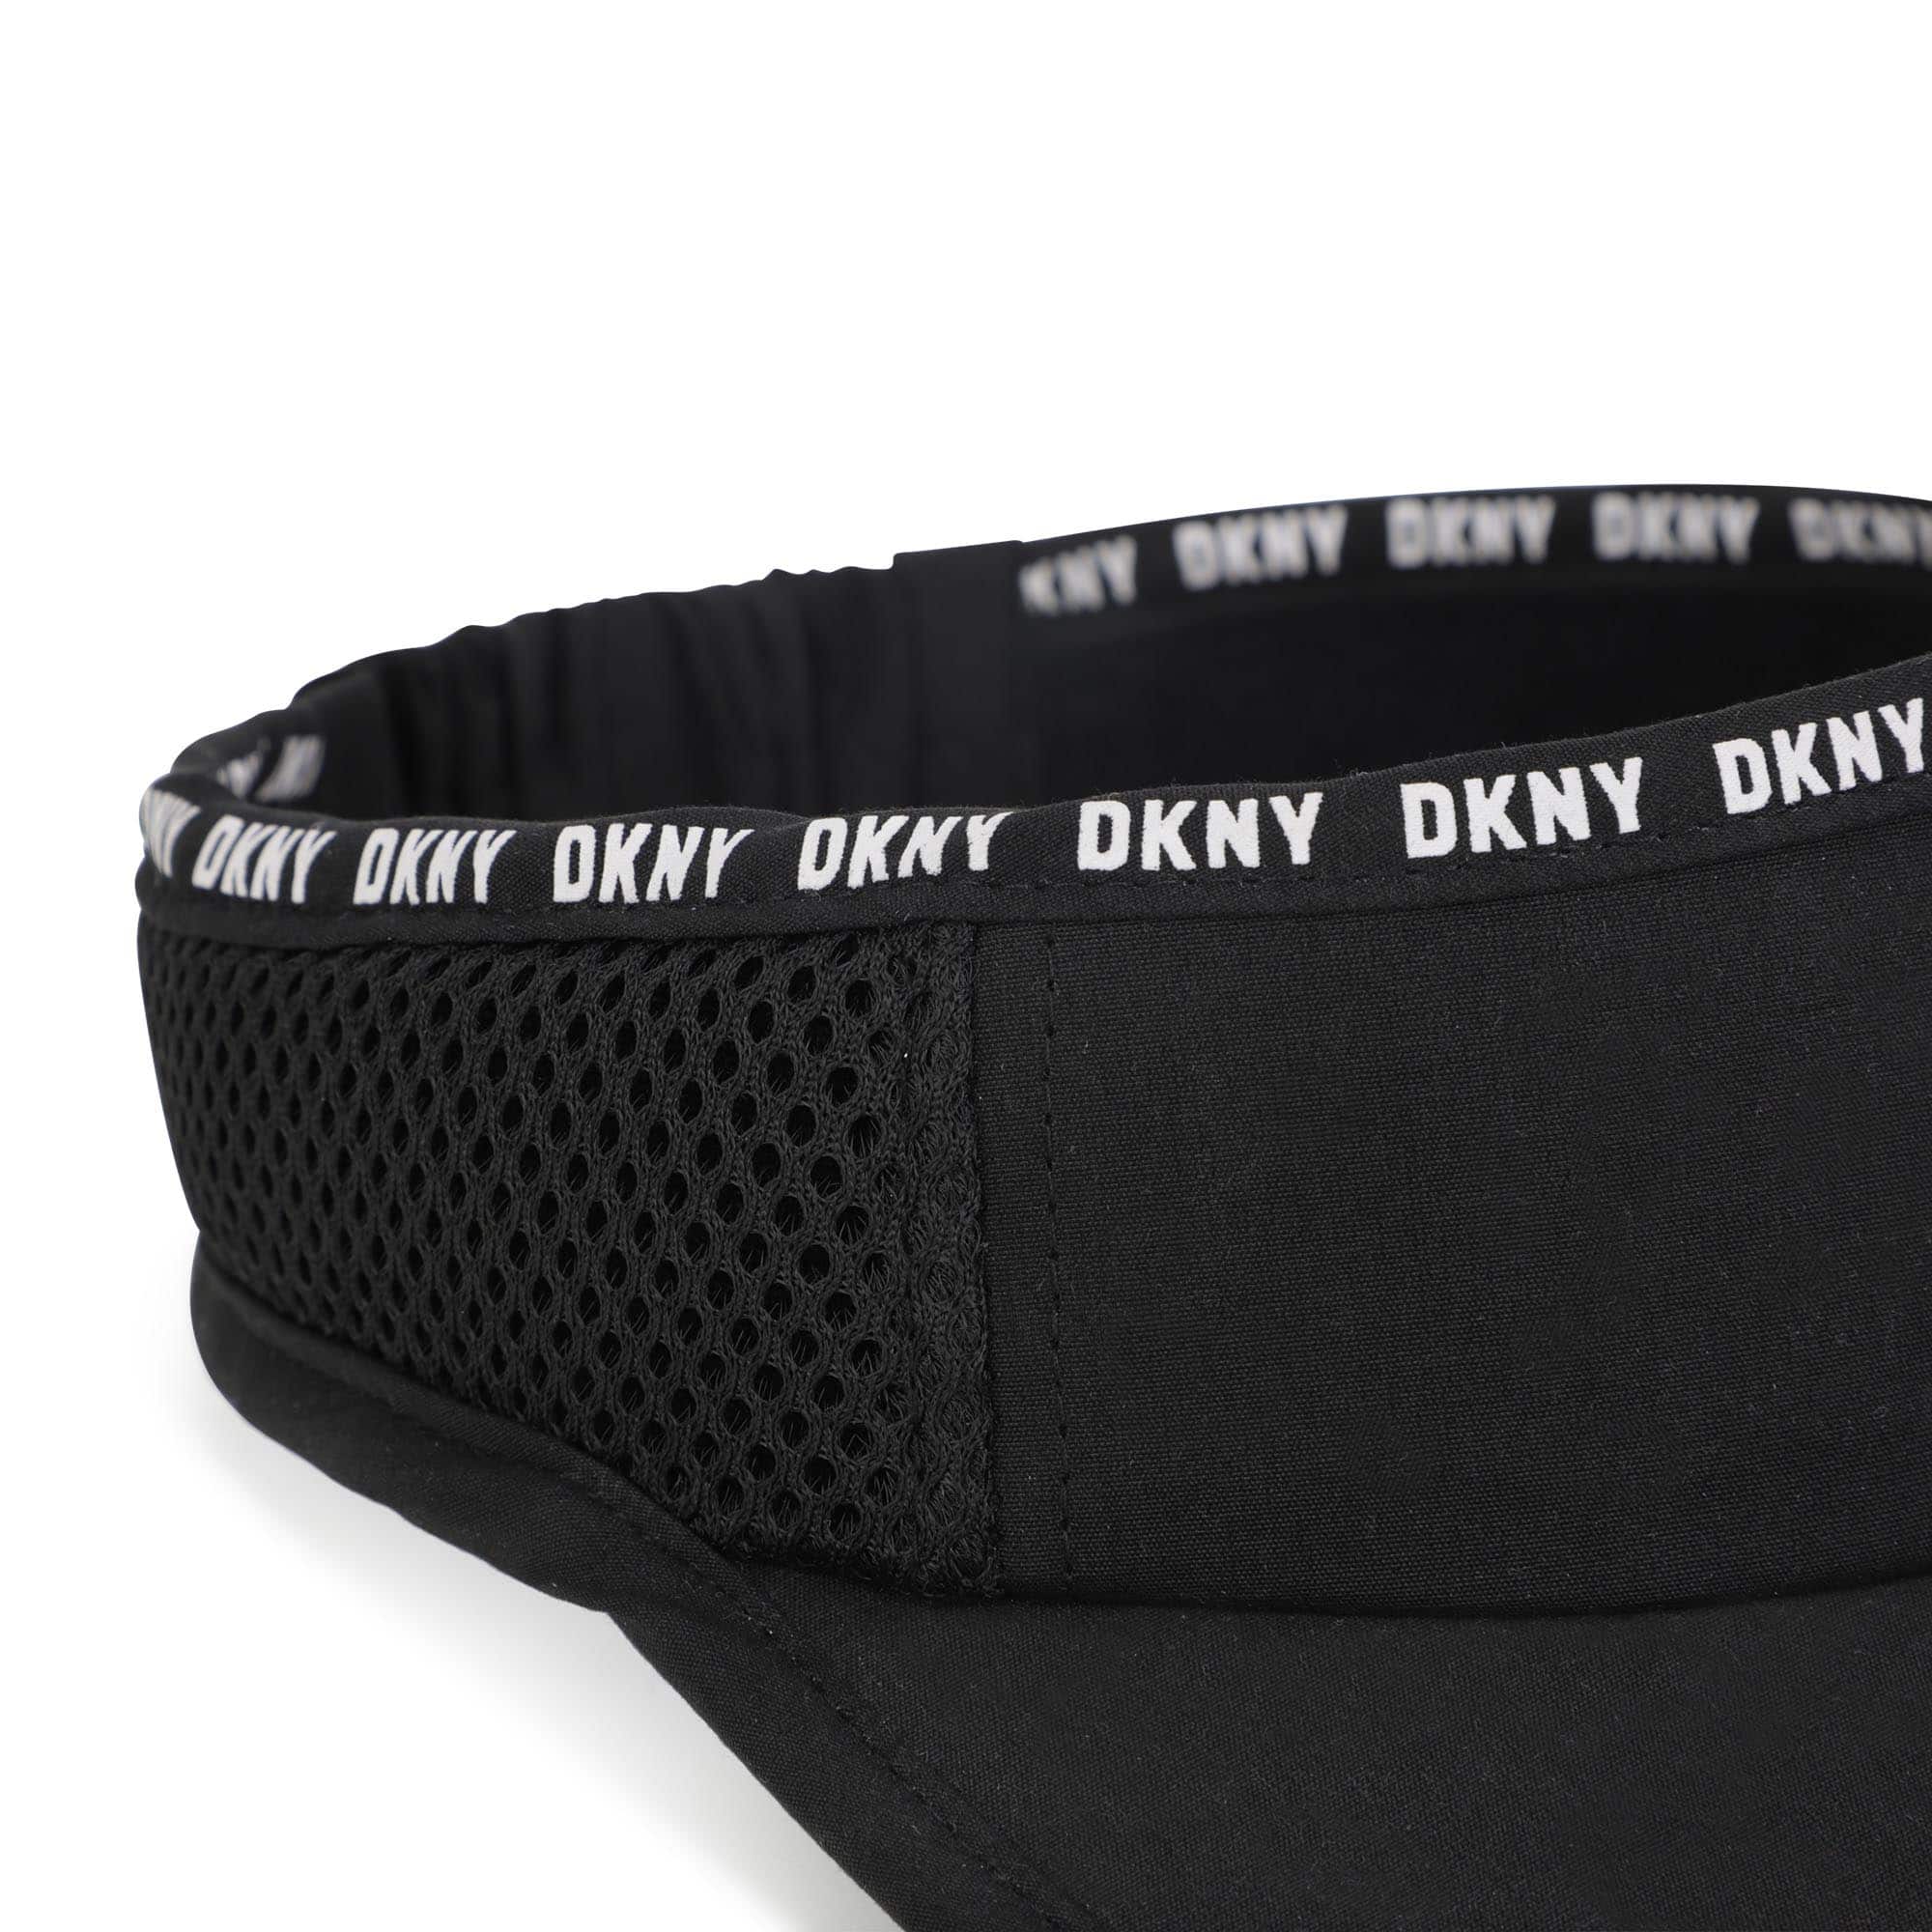 DKNY girls black visor with logos side view